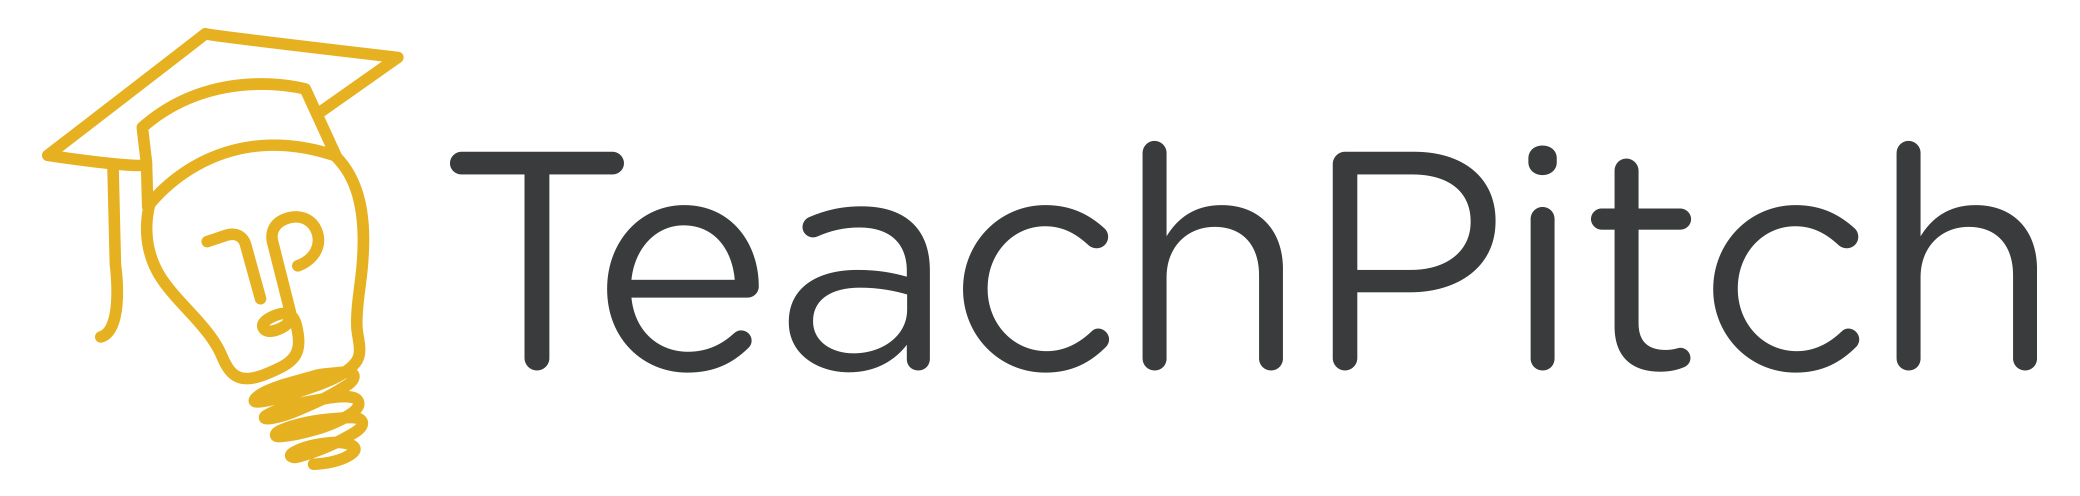 TeachPitch logo.jpg